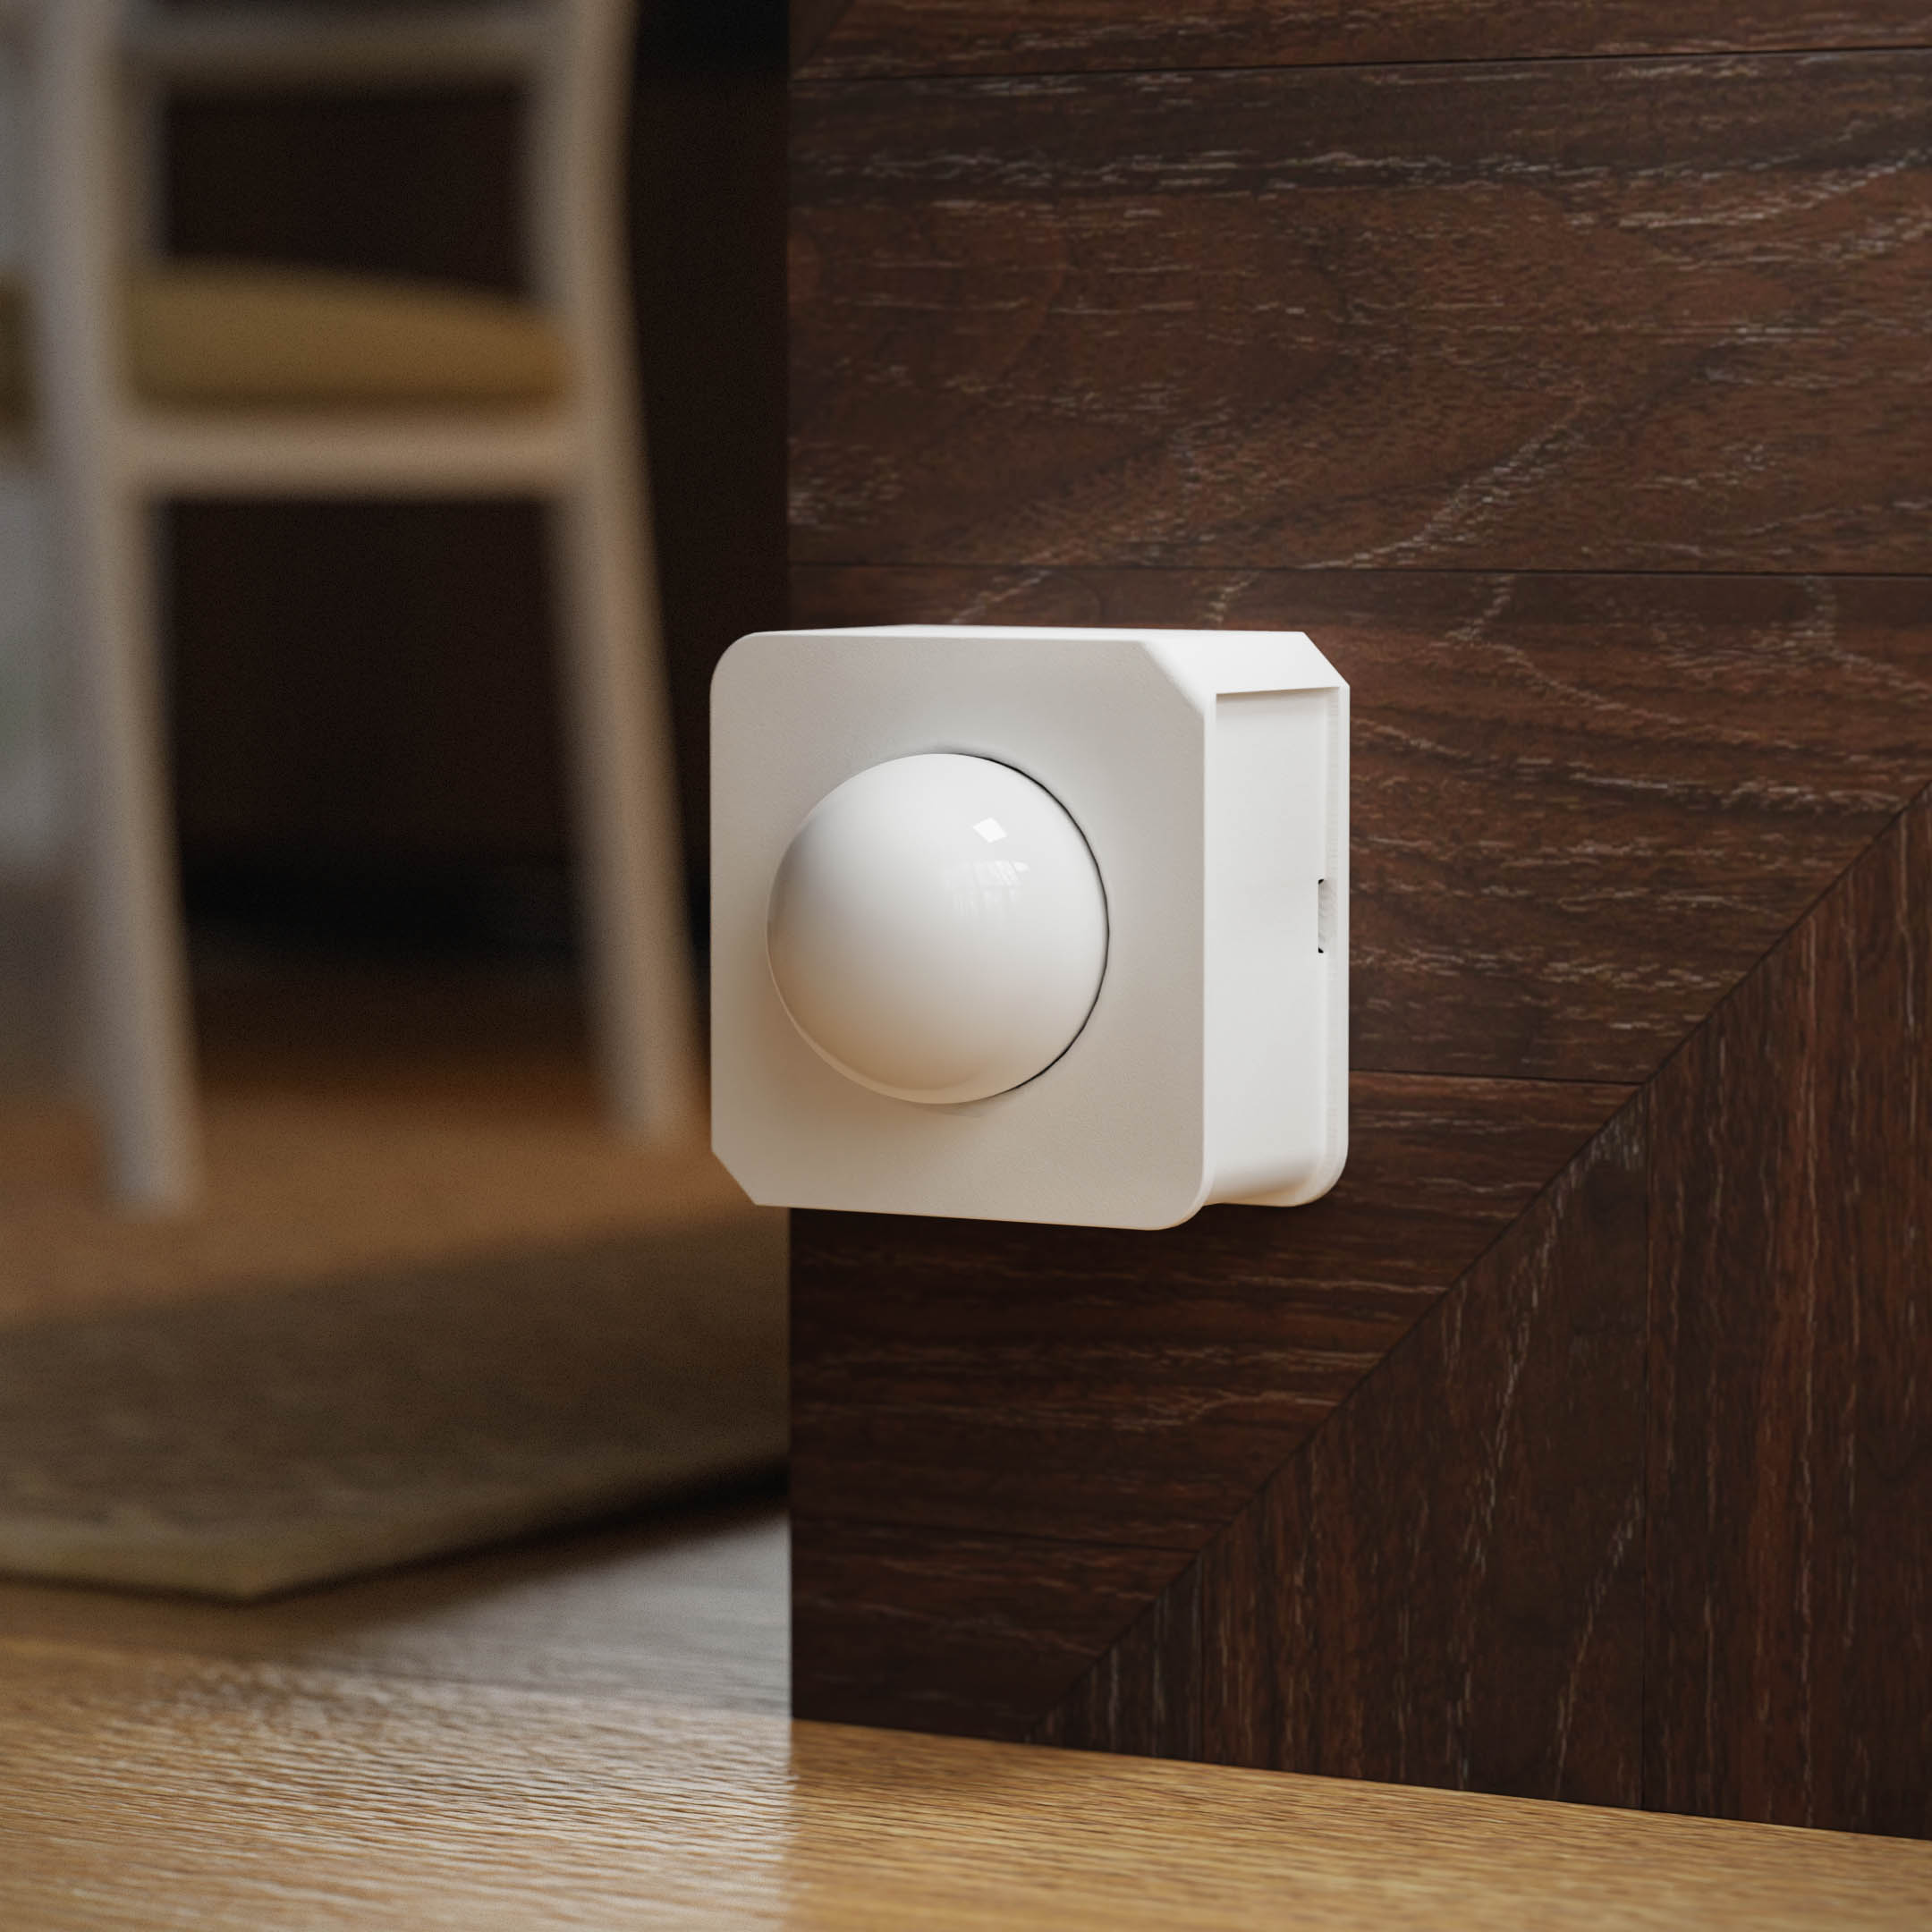 SNZB-03-smart-motion-sensor-mounted-on-dark-brown-wooden-wall-near-the-floor